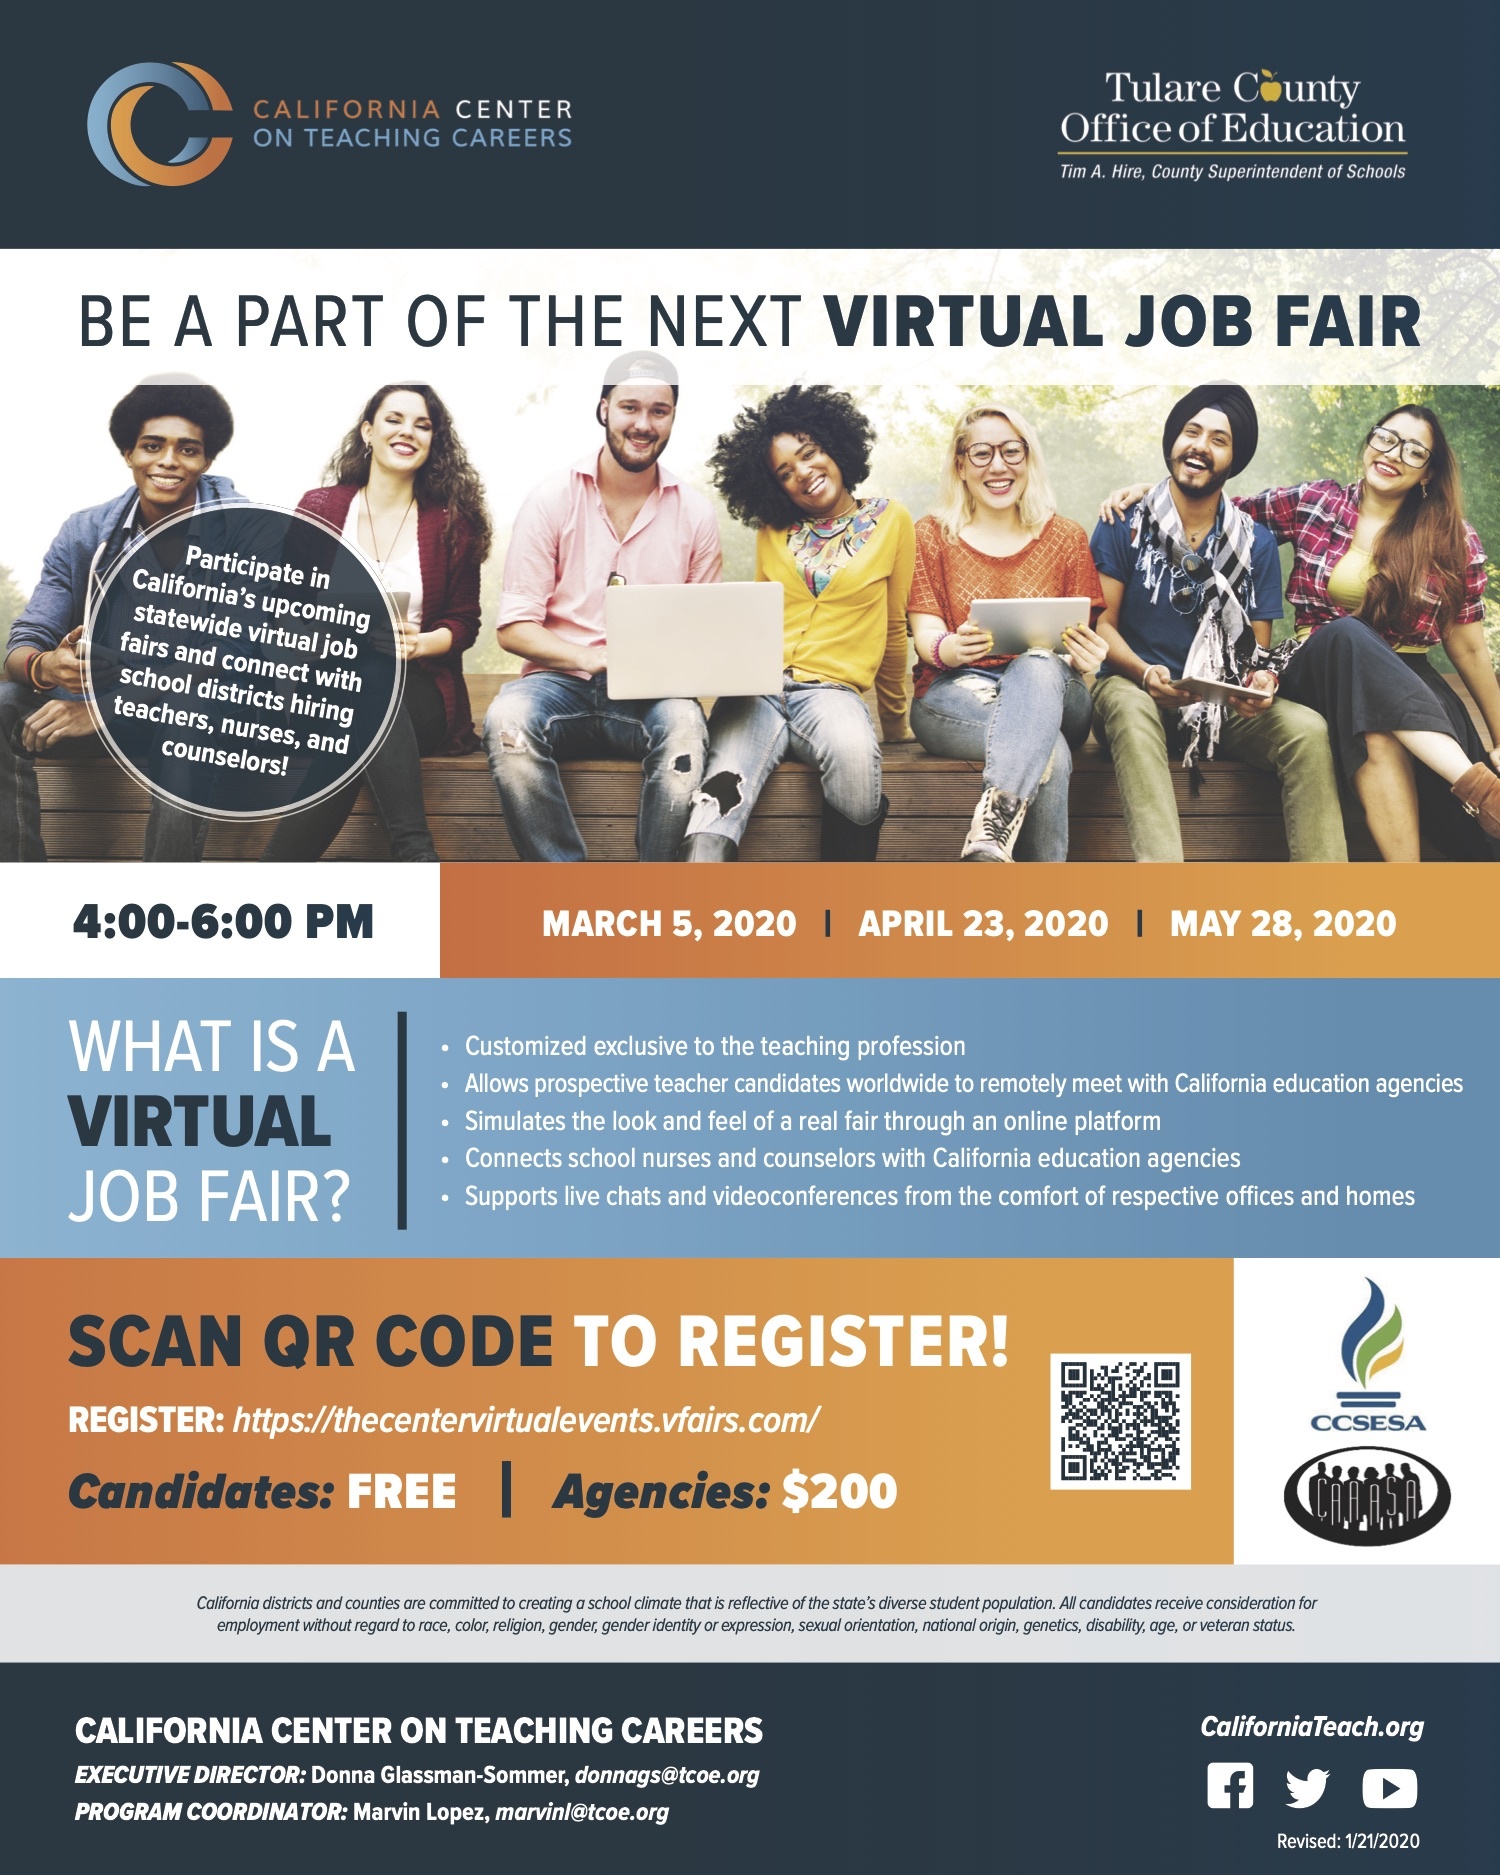 California Center on Teaching Career Virtual Job Fair Flyer